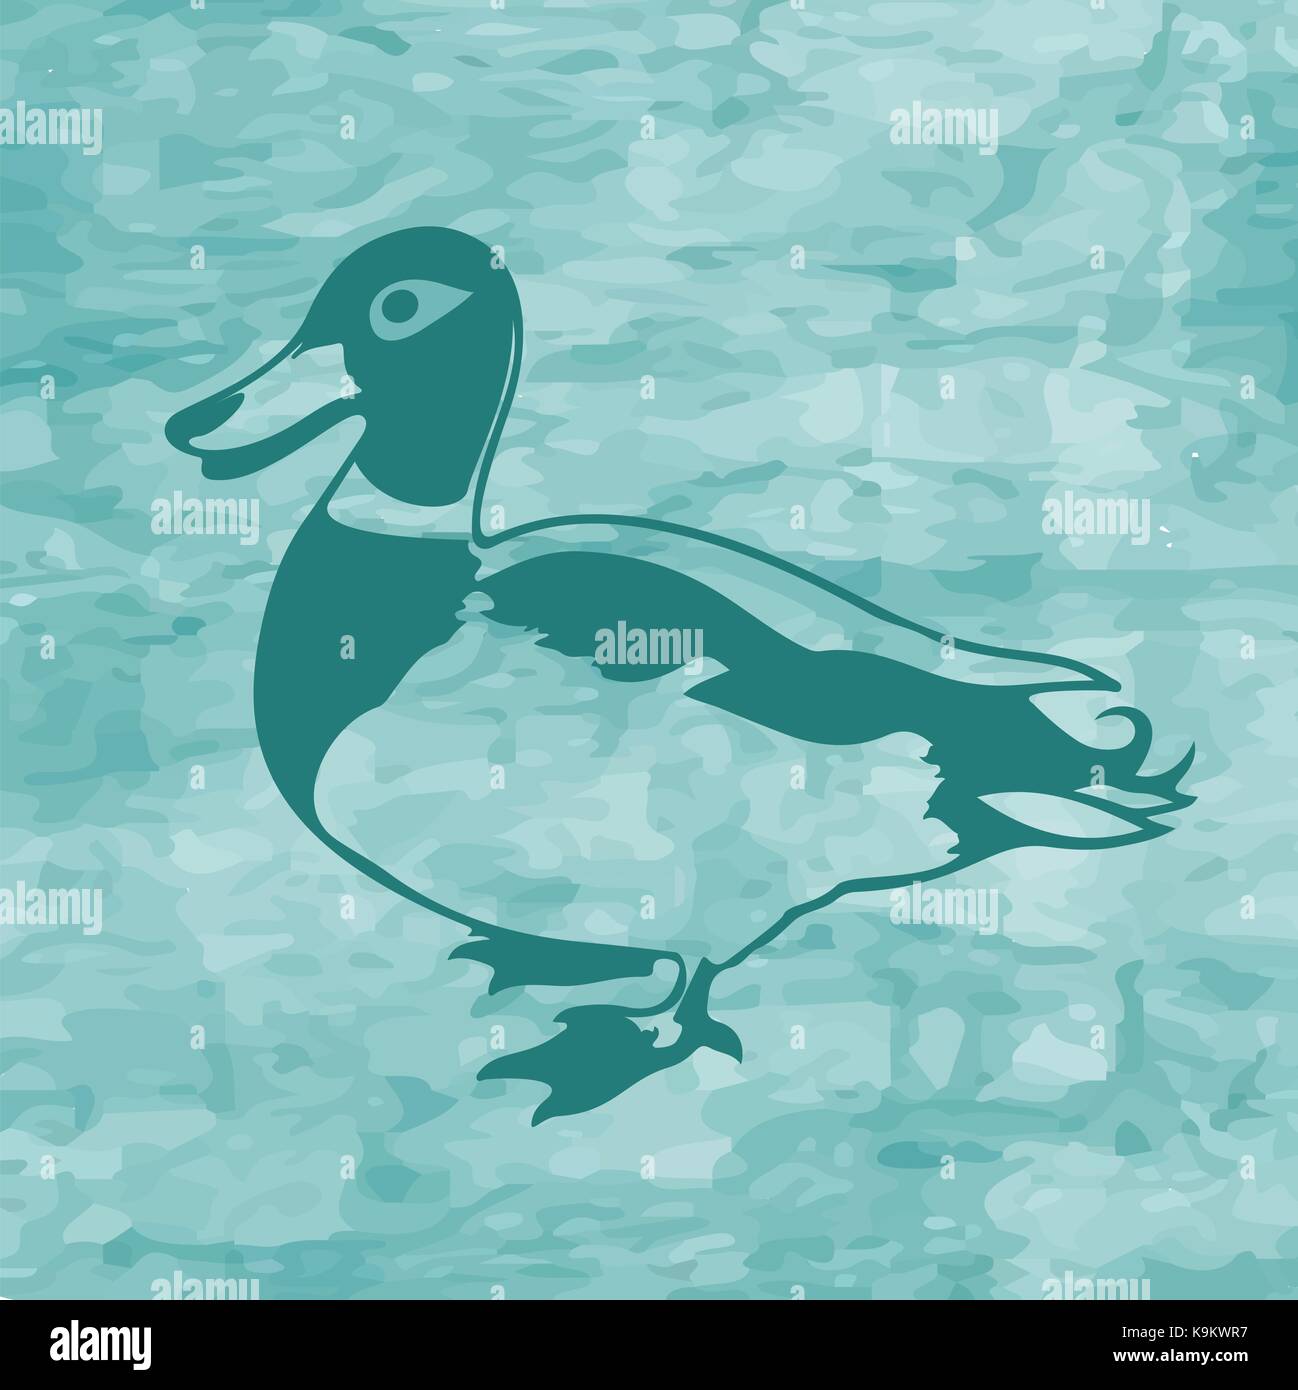 Funny hobo rubber ducks wallpaper  1680x1050  118604  WallpaperUP